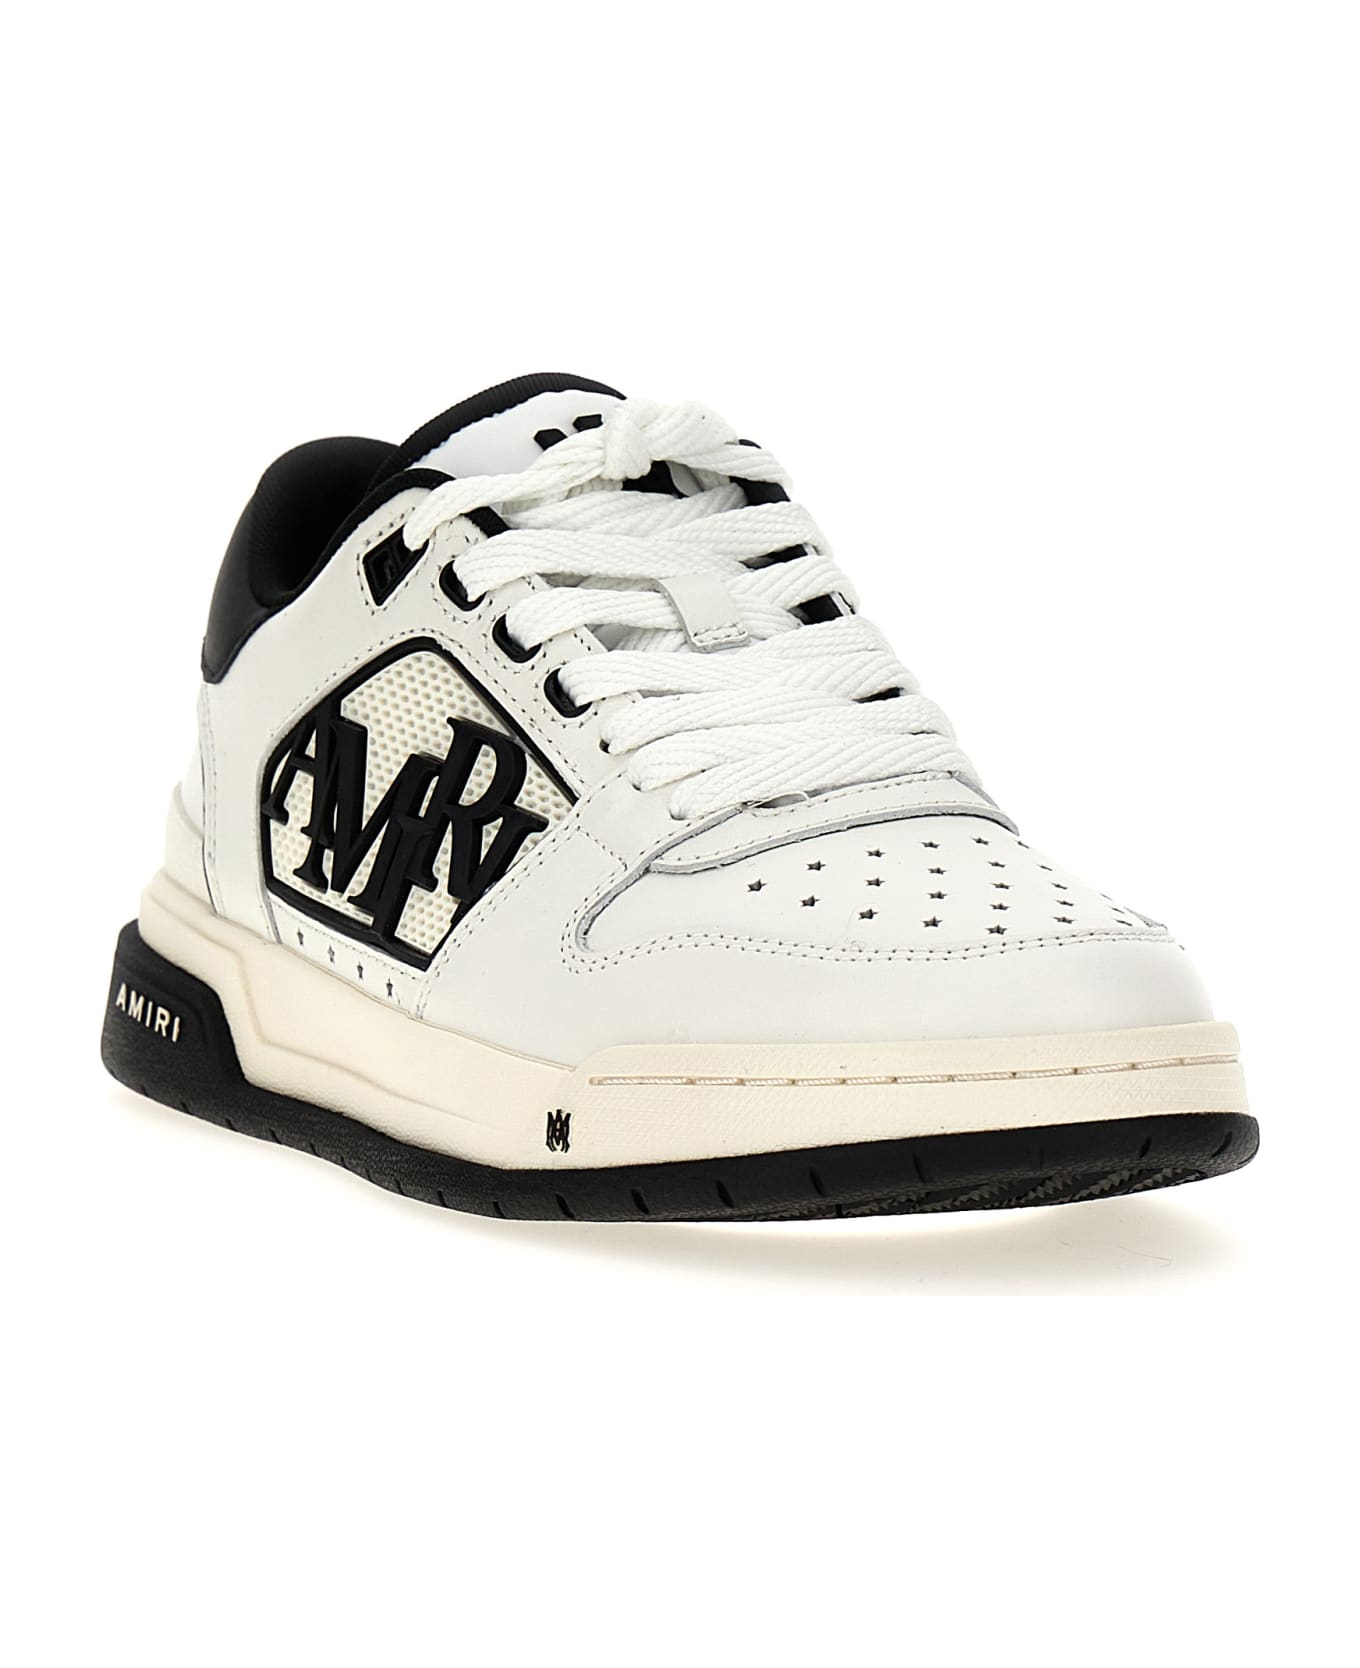 AMIRI 'classic Low' Sneakers - White/Black スニーカー